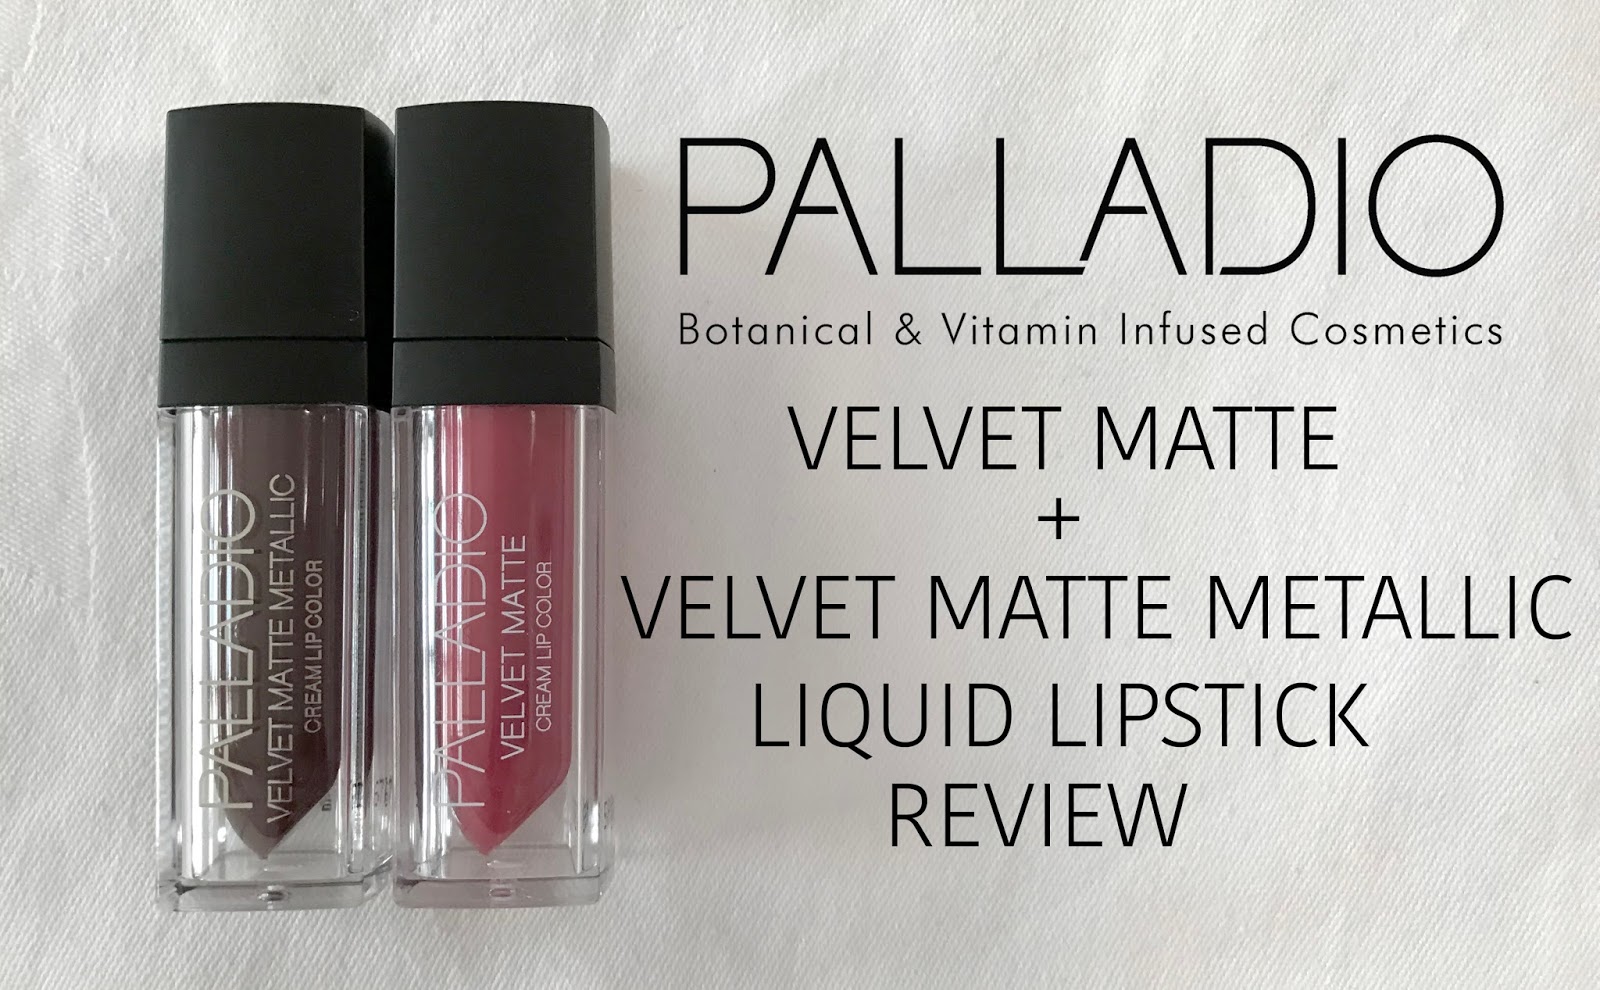 Palladio Velvet Matte & Metallic Liquid Lipstick Review